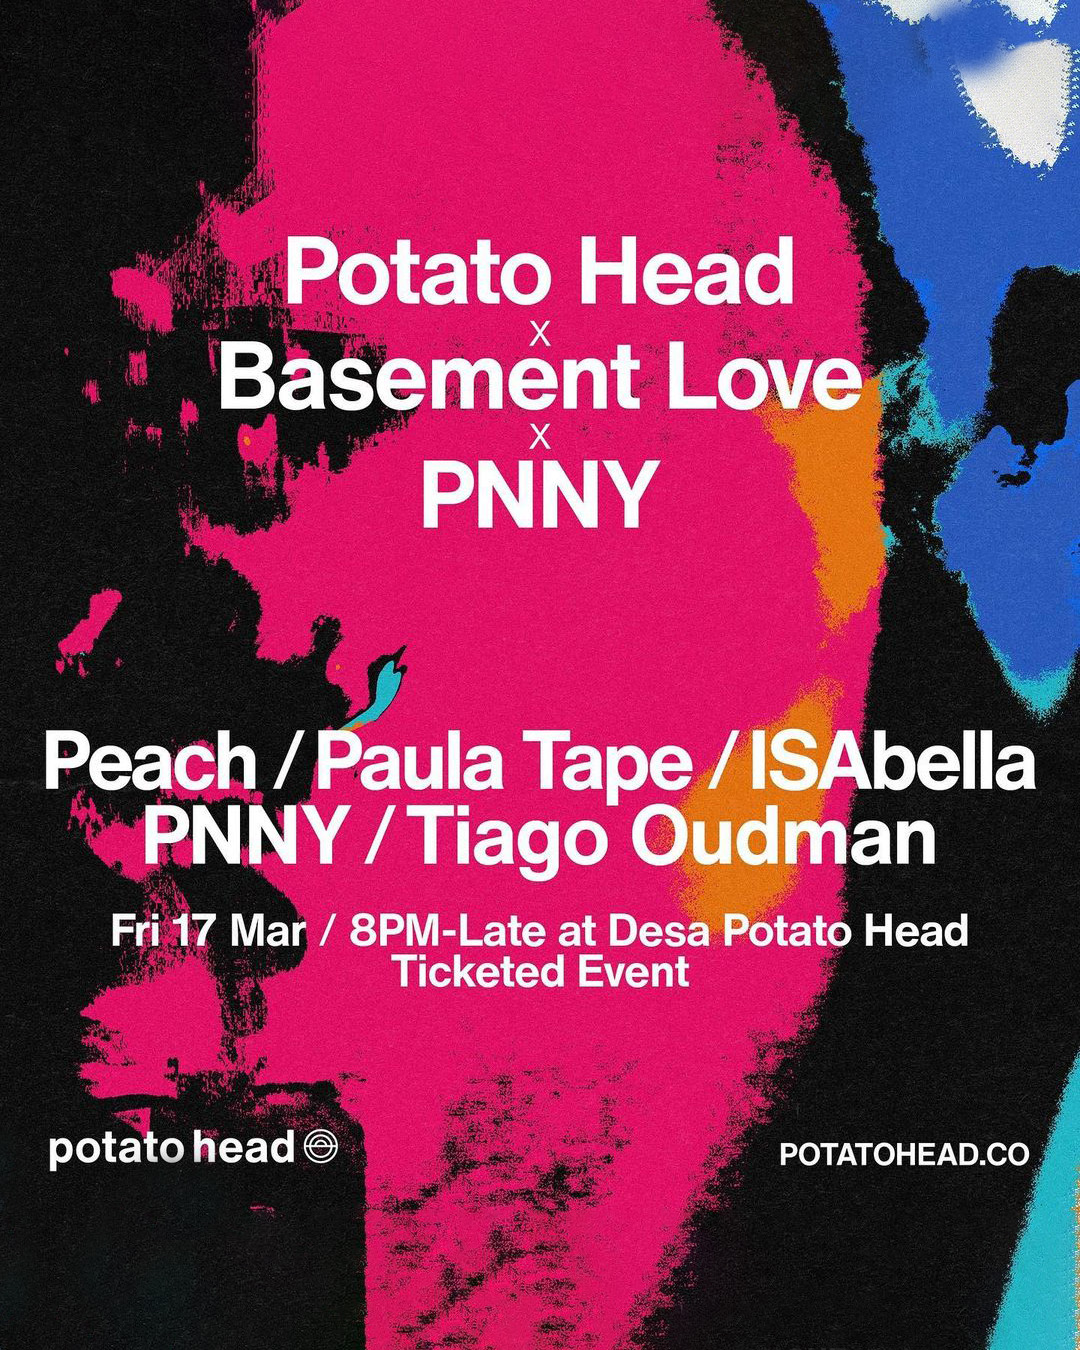 POTATO HEAD PRESENTS BASEMENT LOVE – FRIDAY MARCH 17TH thumbnail image